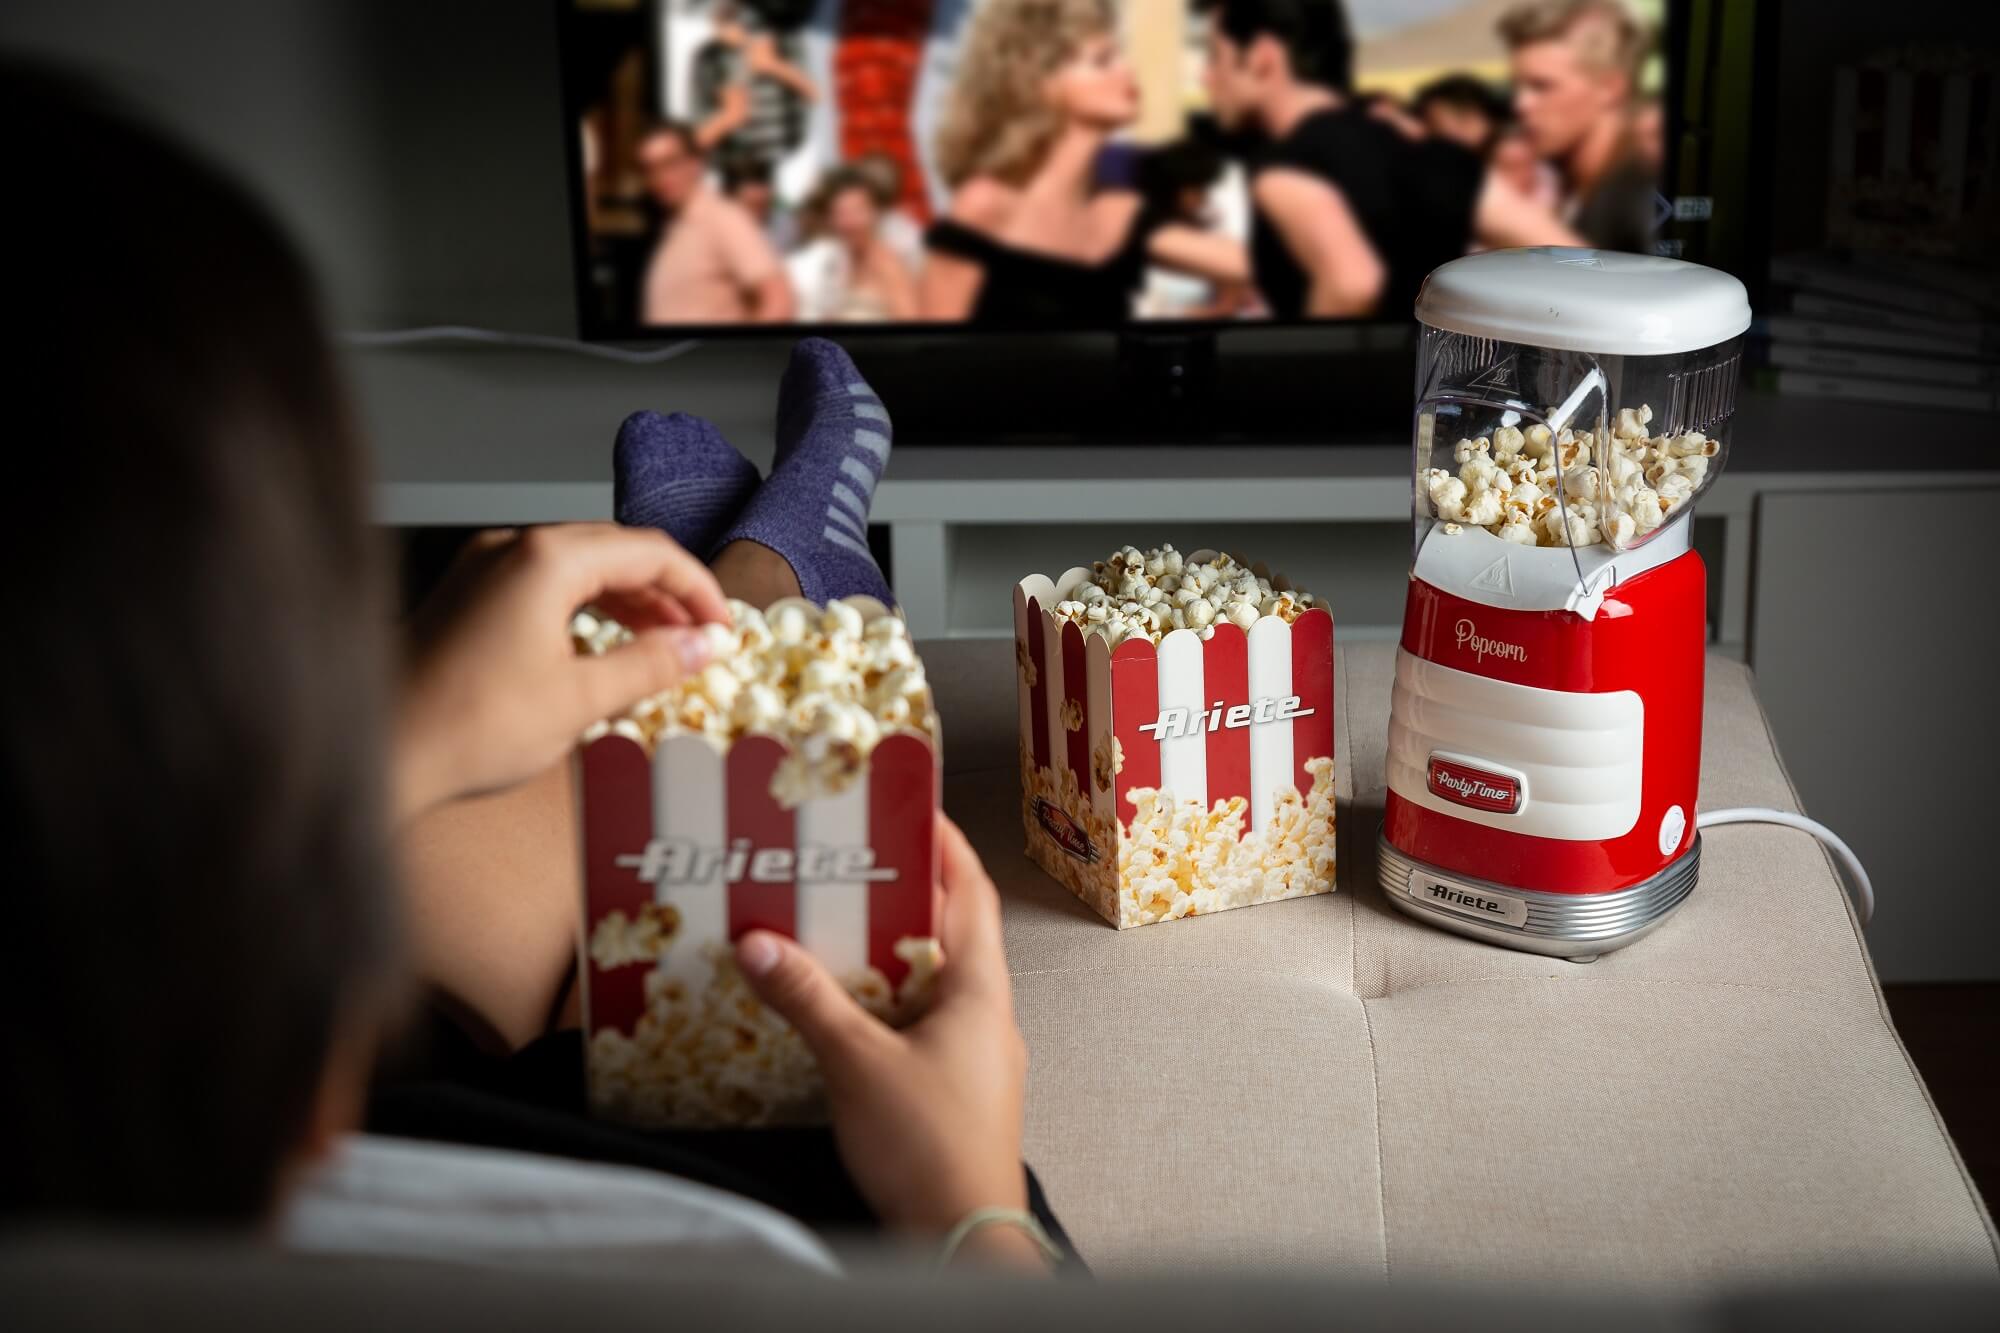 macchina-per-popcorn-party-time-ariete-2956-rosso-03-cd627673817da9135a5429fe3741c862